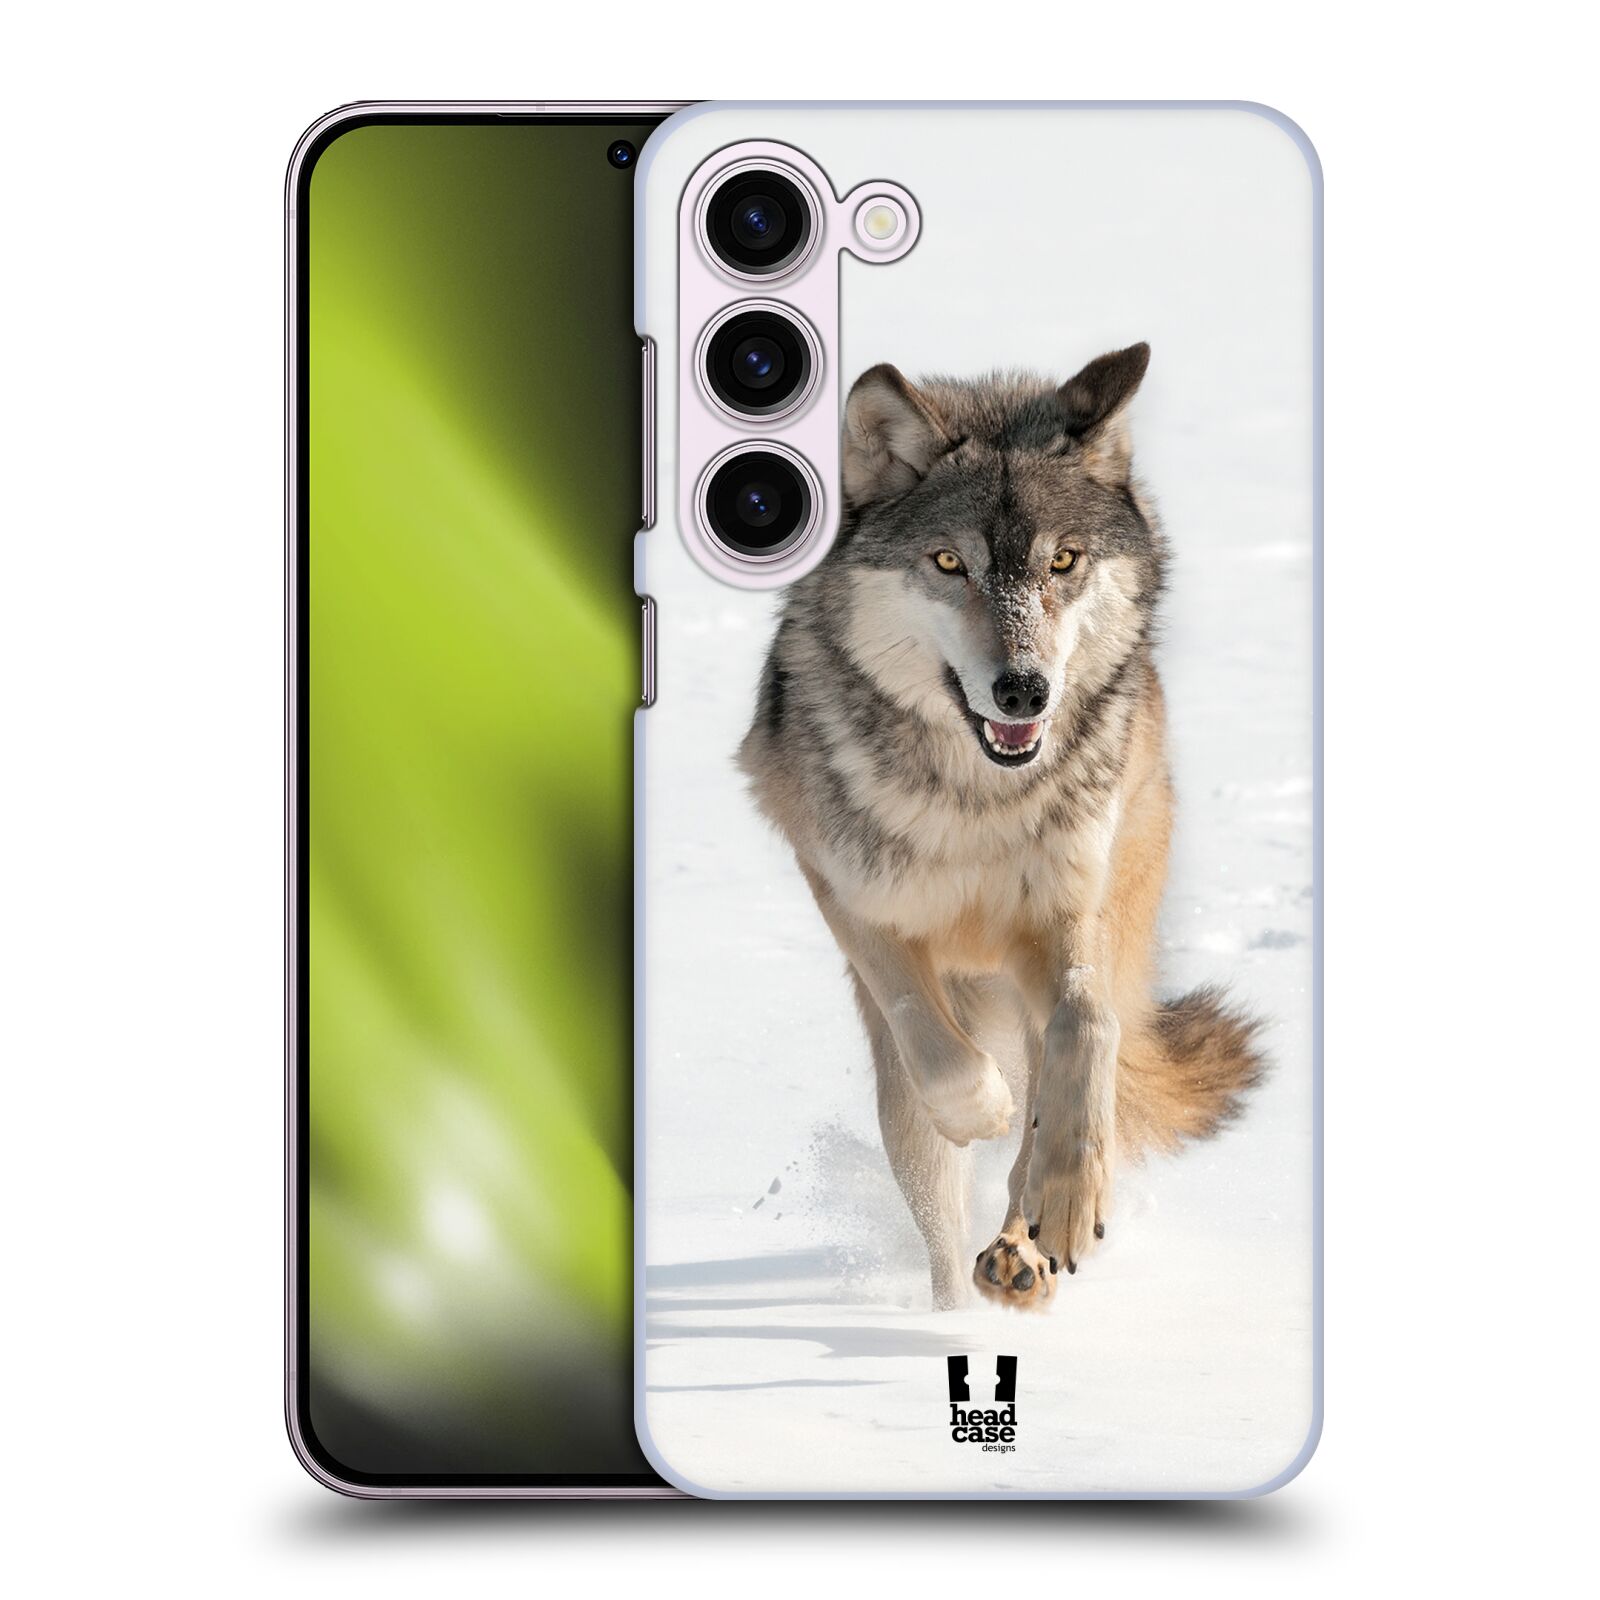 Plastový obal HEAD CASE na mobil Samsung Galaxy S23+ vzor Divočina, Divoký život a zvířata foto BĚŽÍCÍ VLK